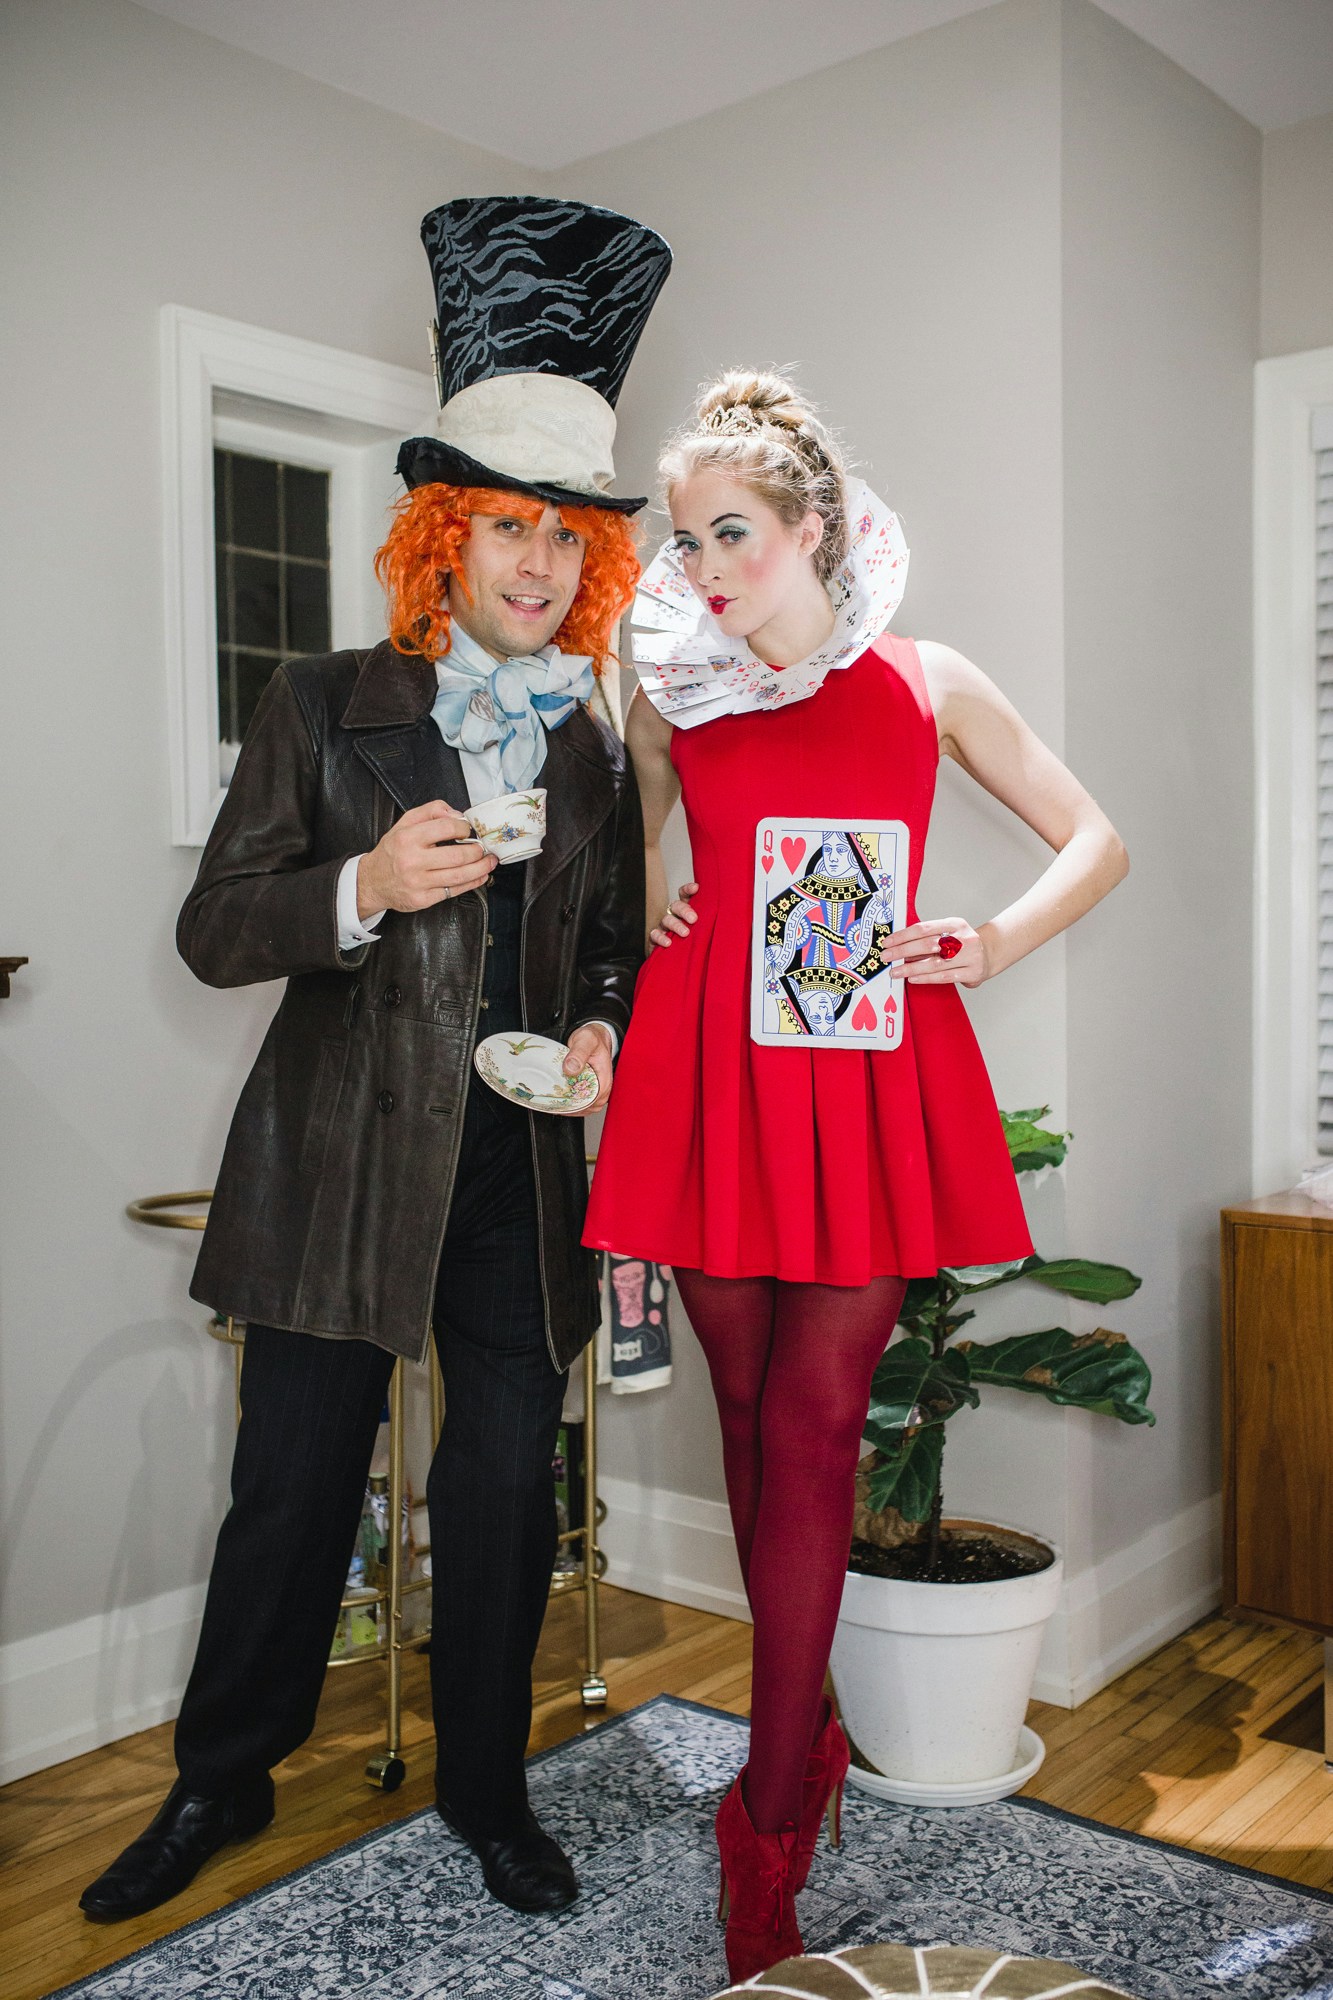 Alice in Wonderland couples halloween costume - DIY Mad Hatter and Queen of Hearts costume idea